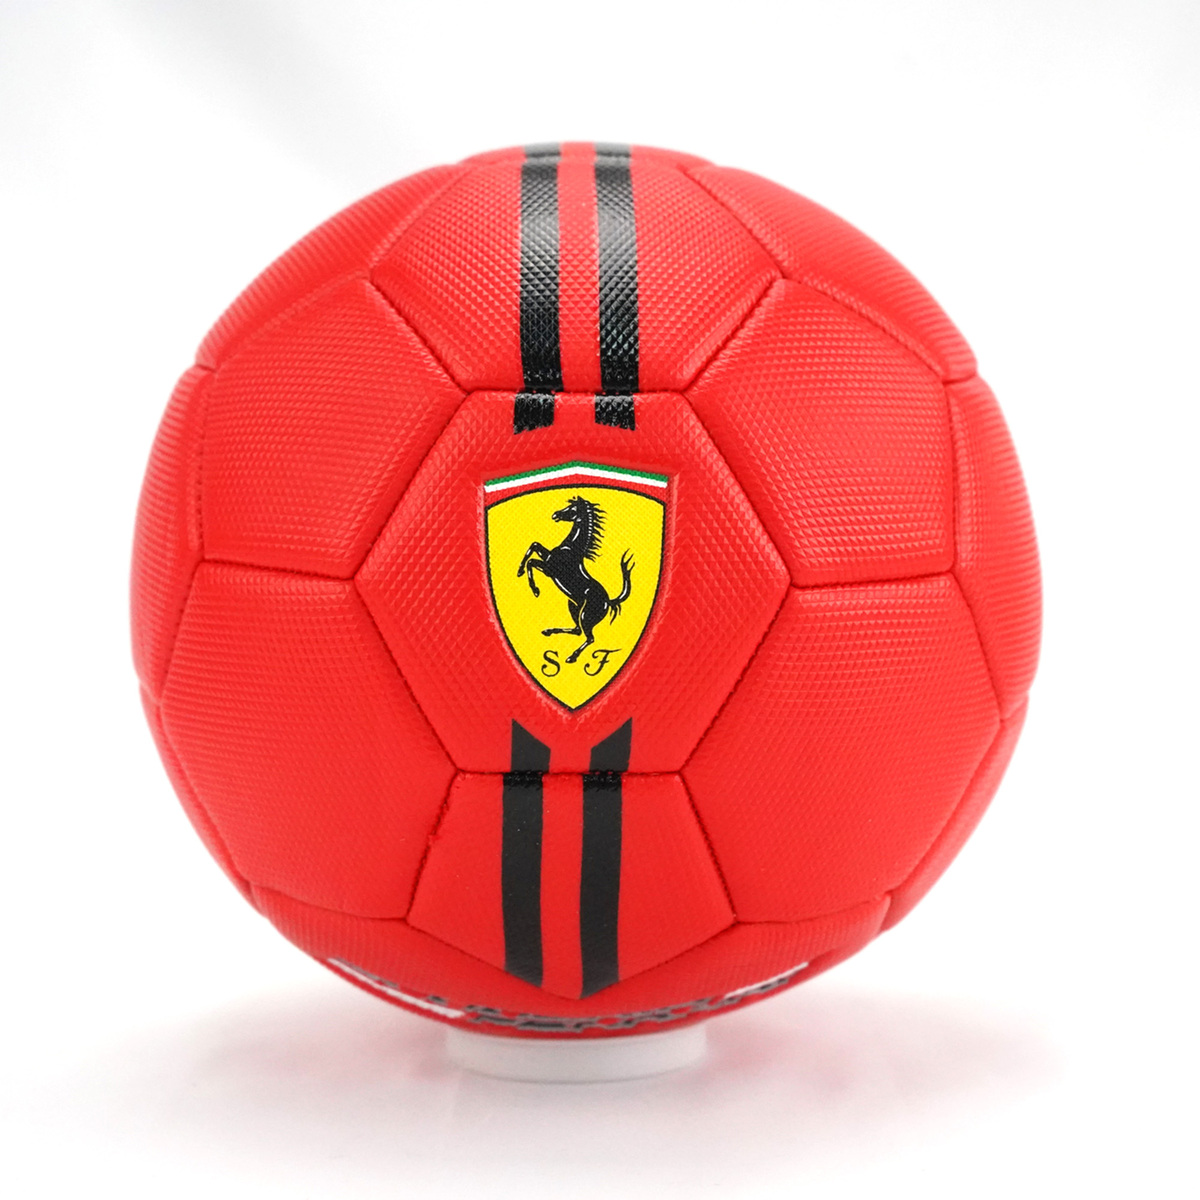 Ferrari Soccer Ball No.5 F661 Red/Strpe